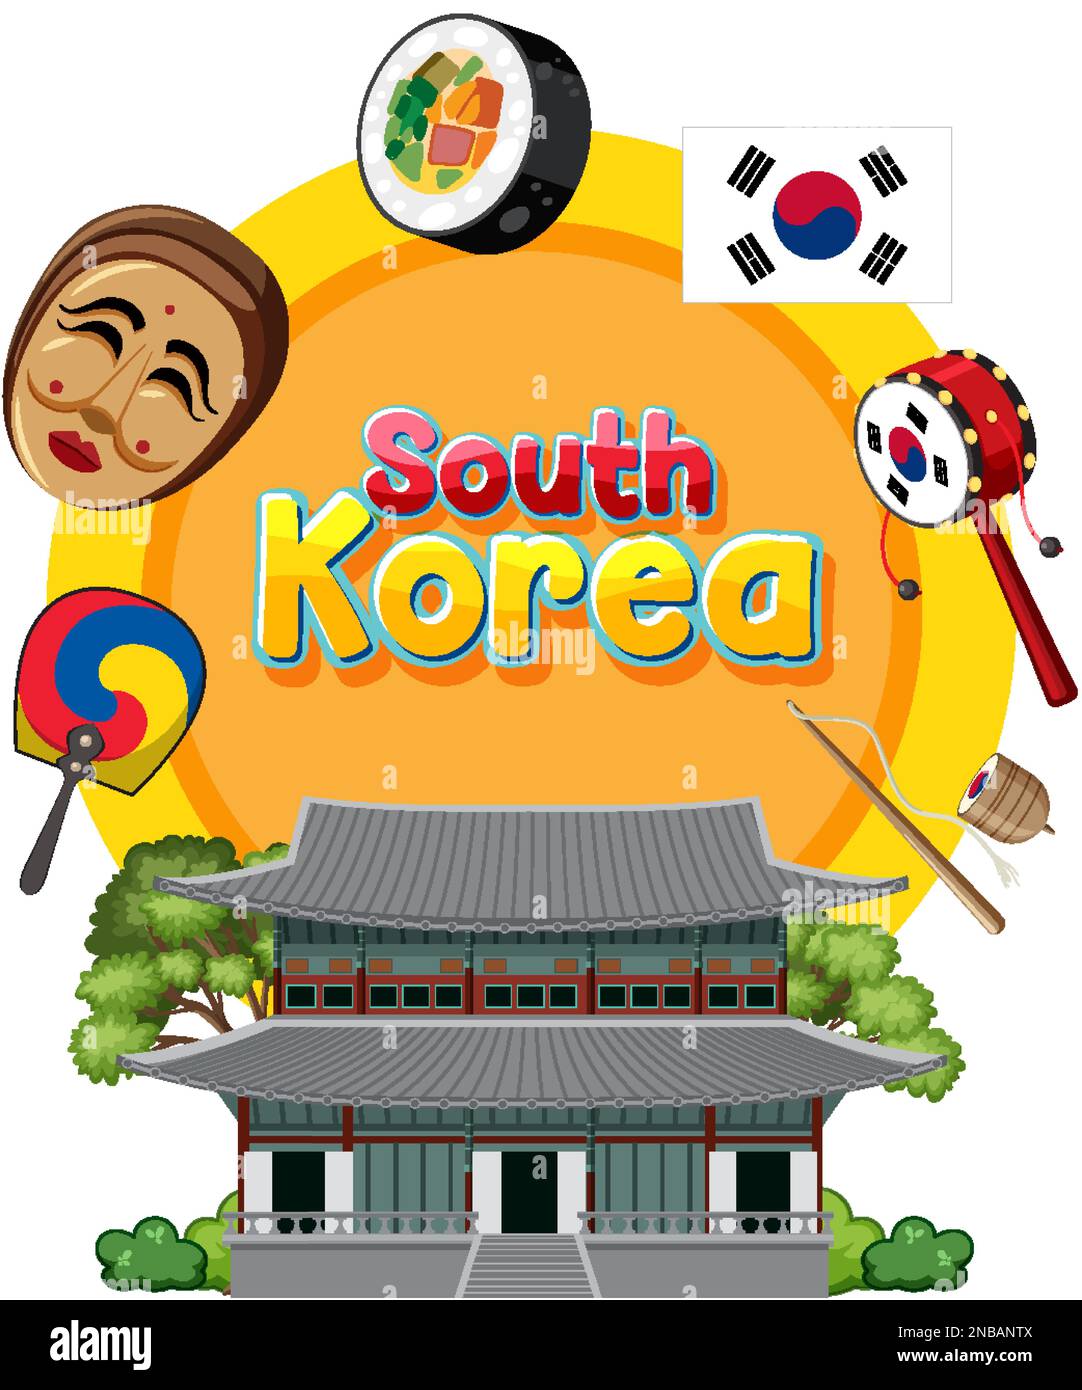 Korean element nation tradition symbol illustration Stock Vector